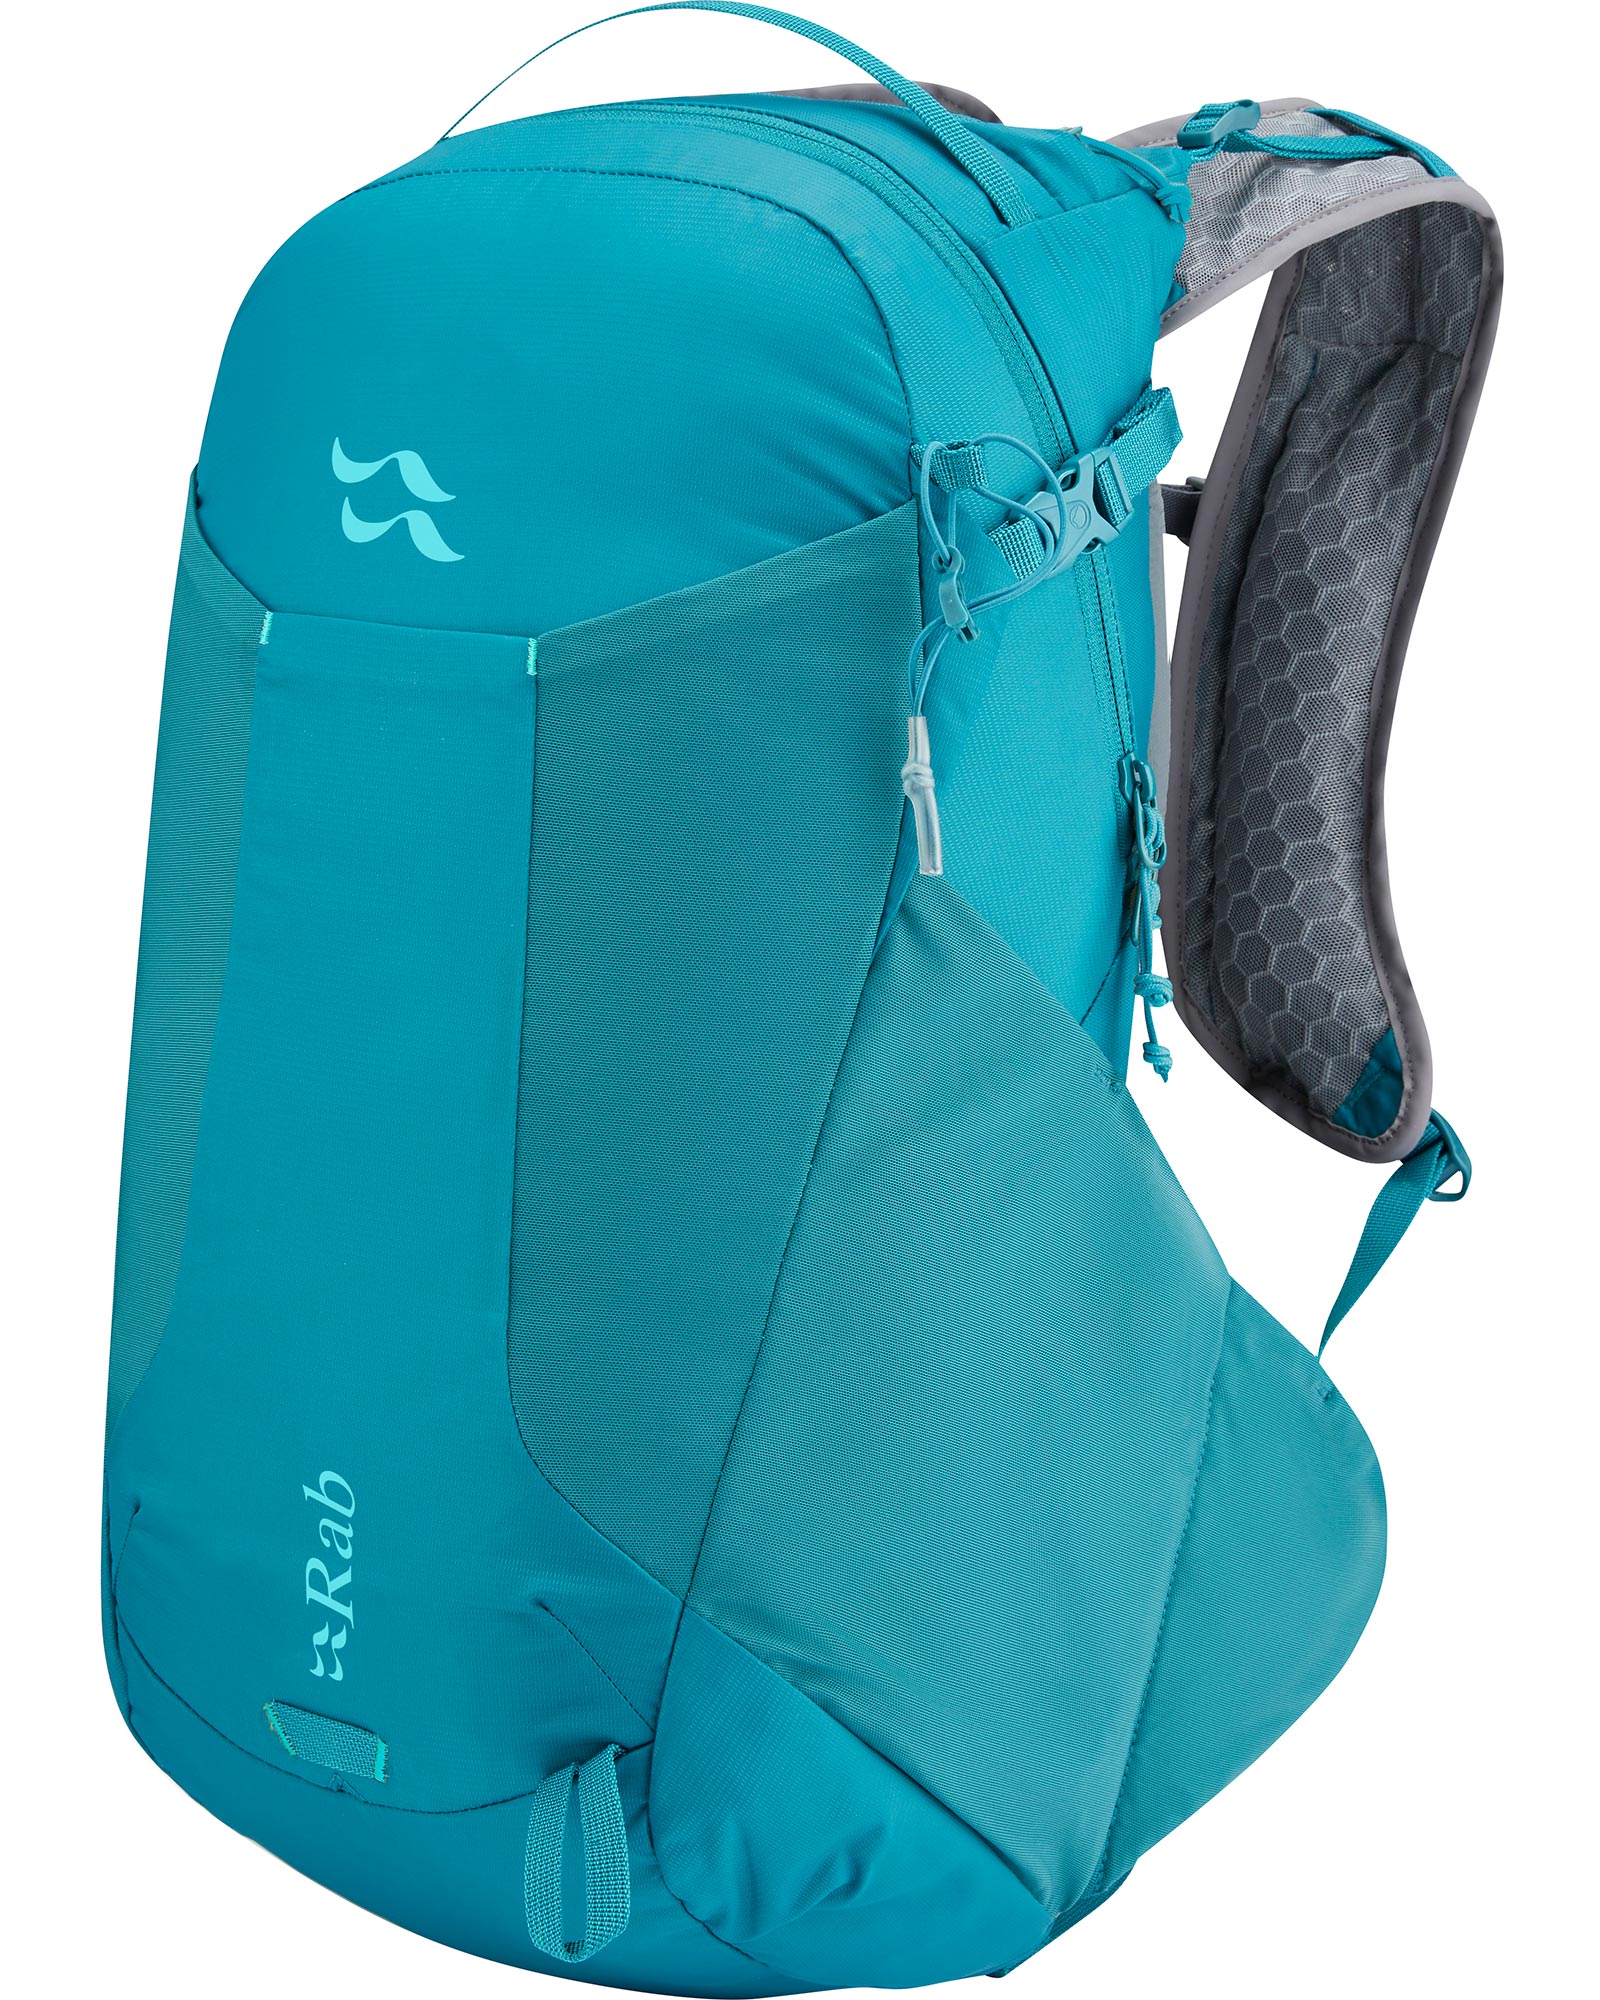 Rab Aeon LT 25 Backpack - Marina Blue